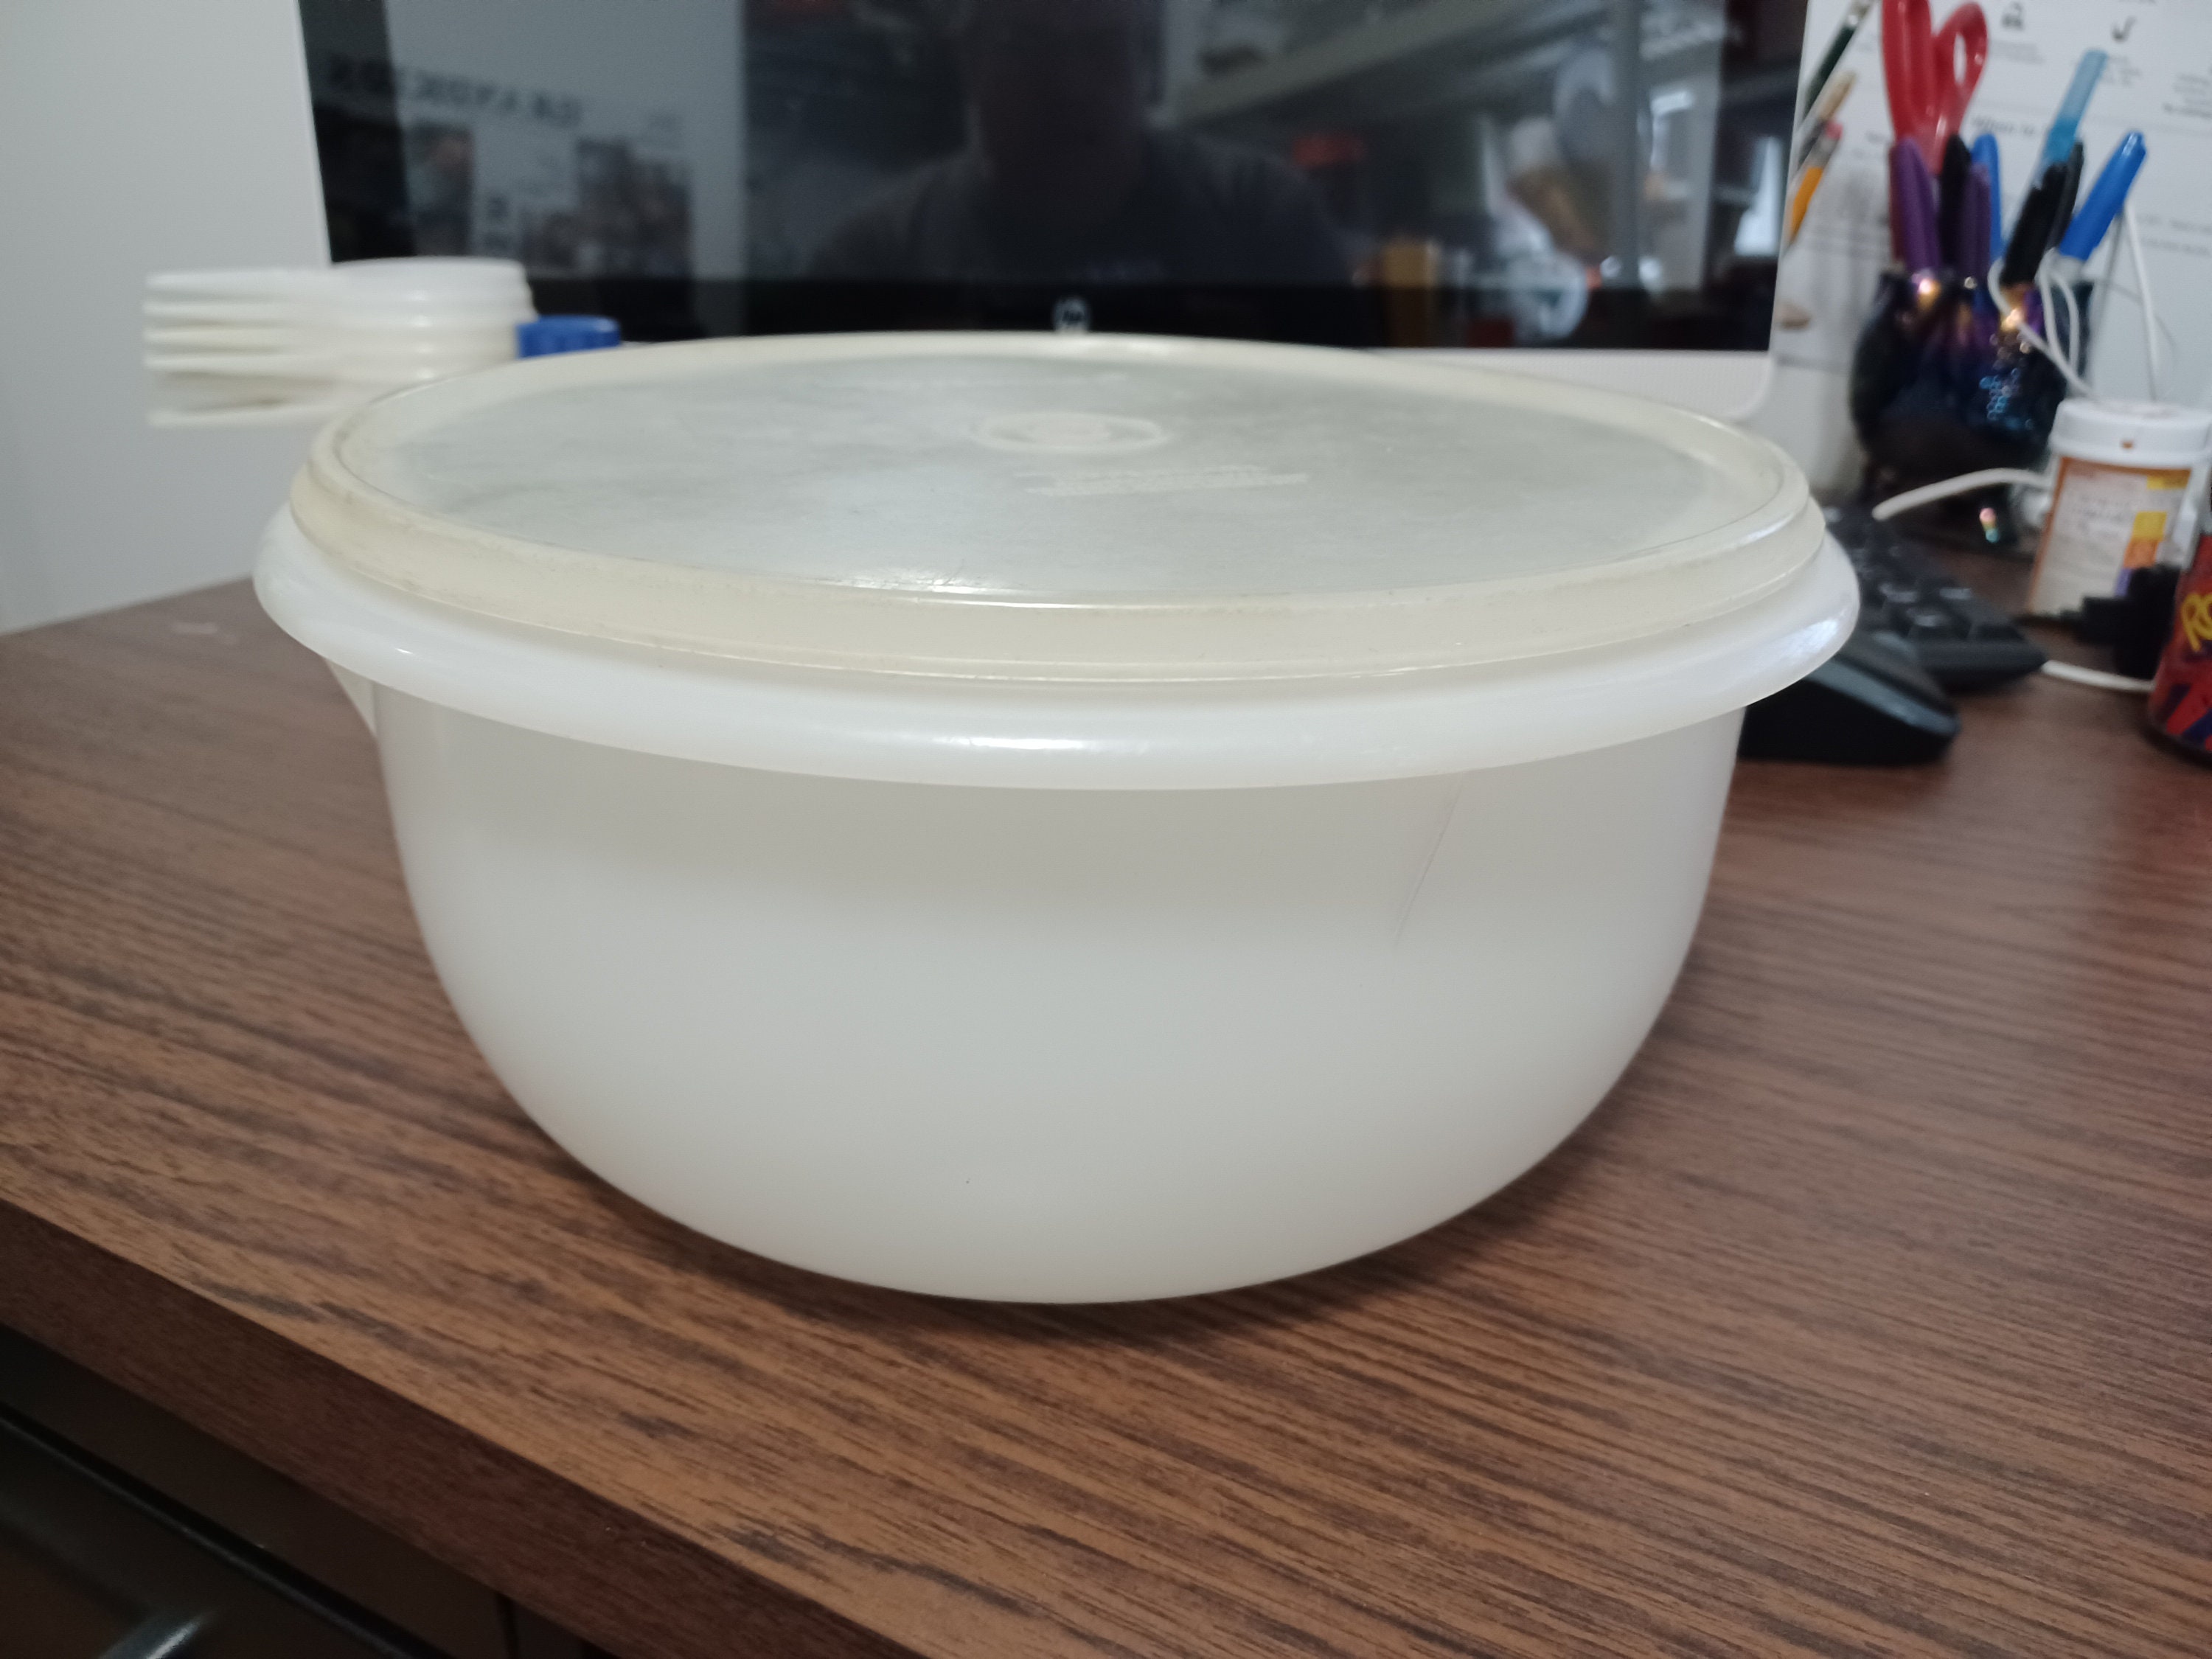 Thatsa® Mega Bowl 10L (42 cup) – Tupperware US